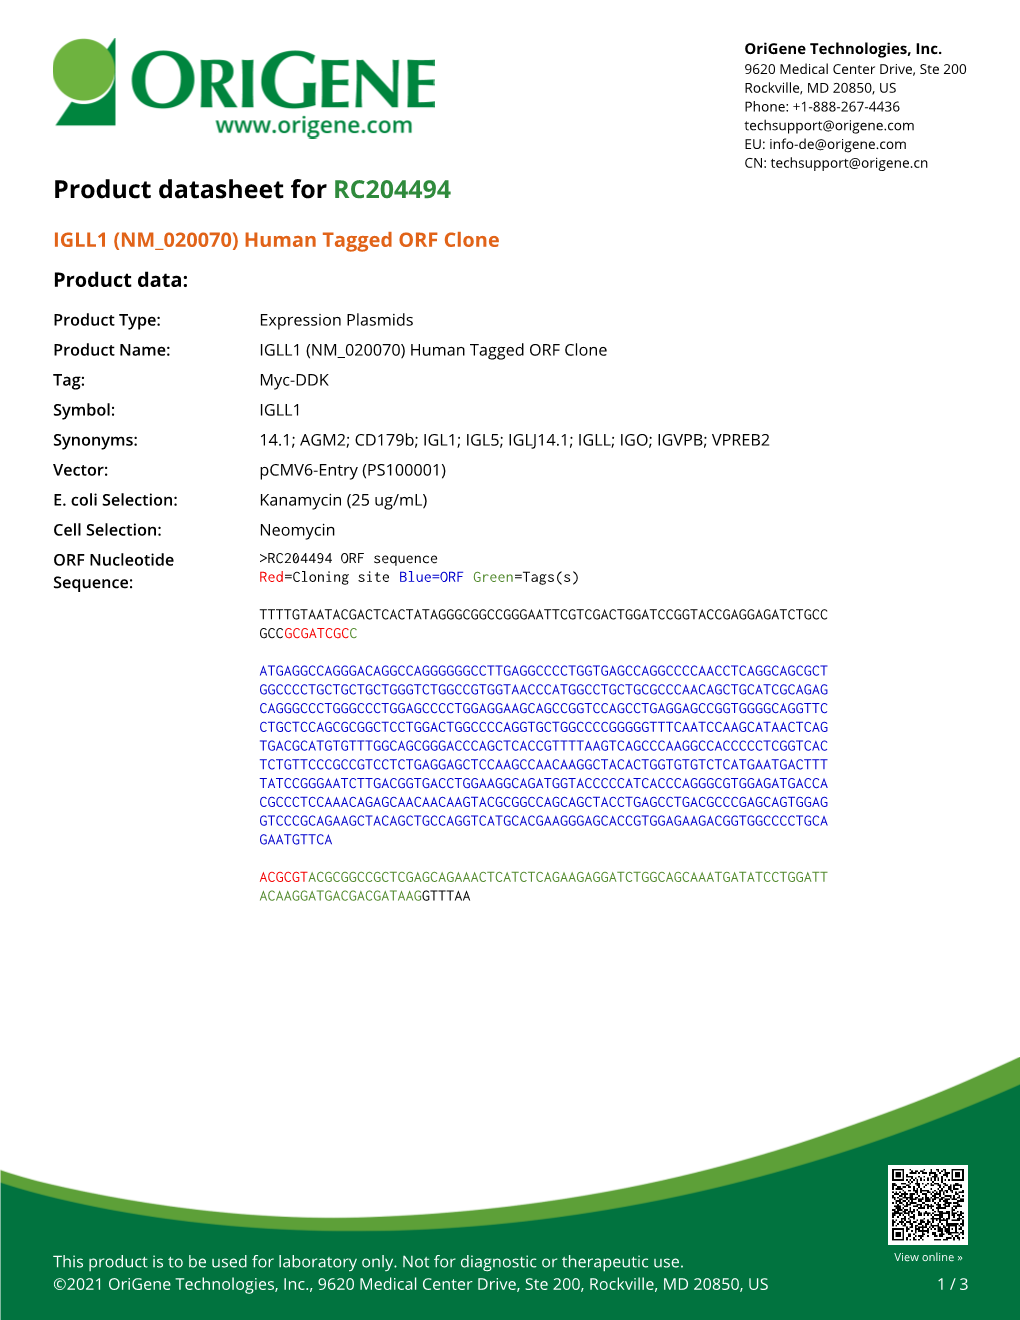 IGLL1 (NM 020070) Human Tagged ORF Clone Product Data